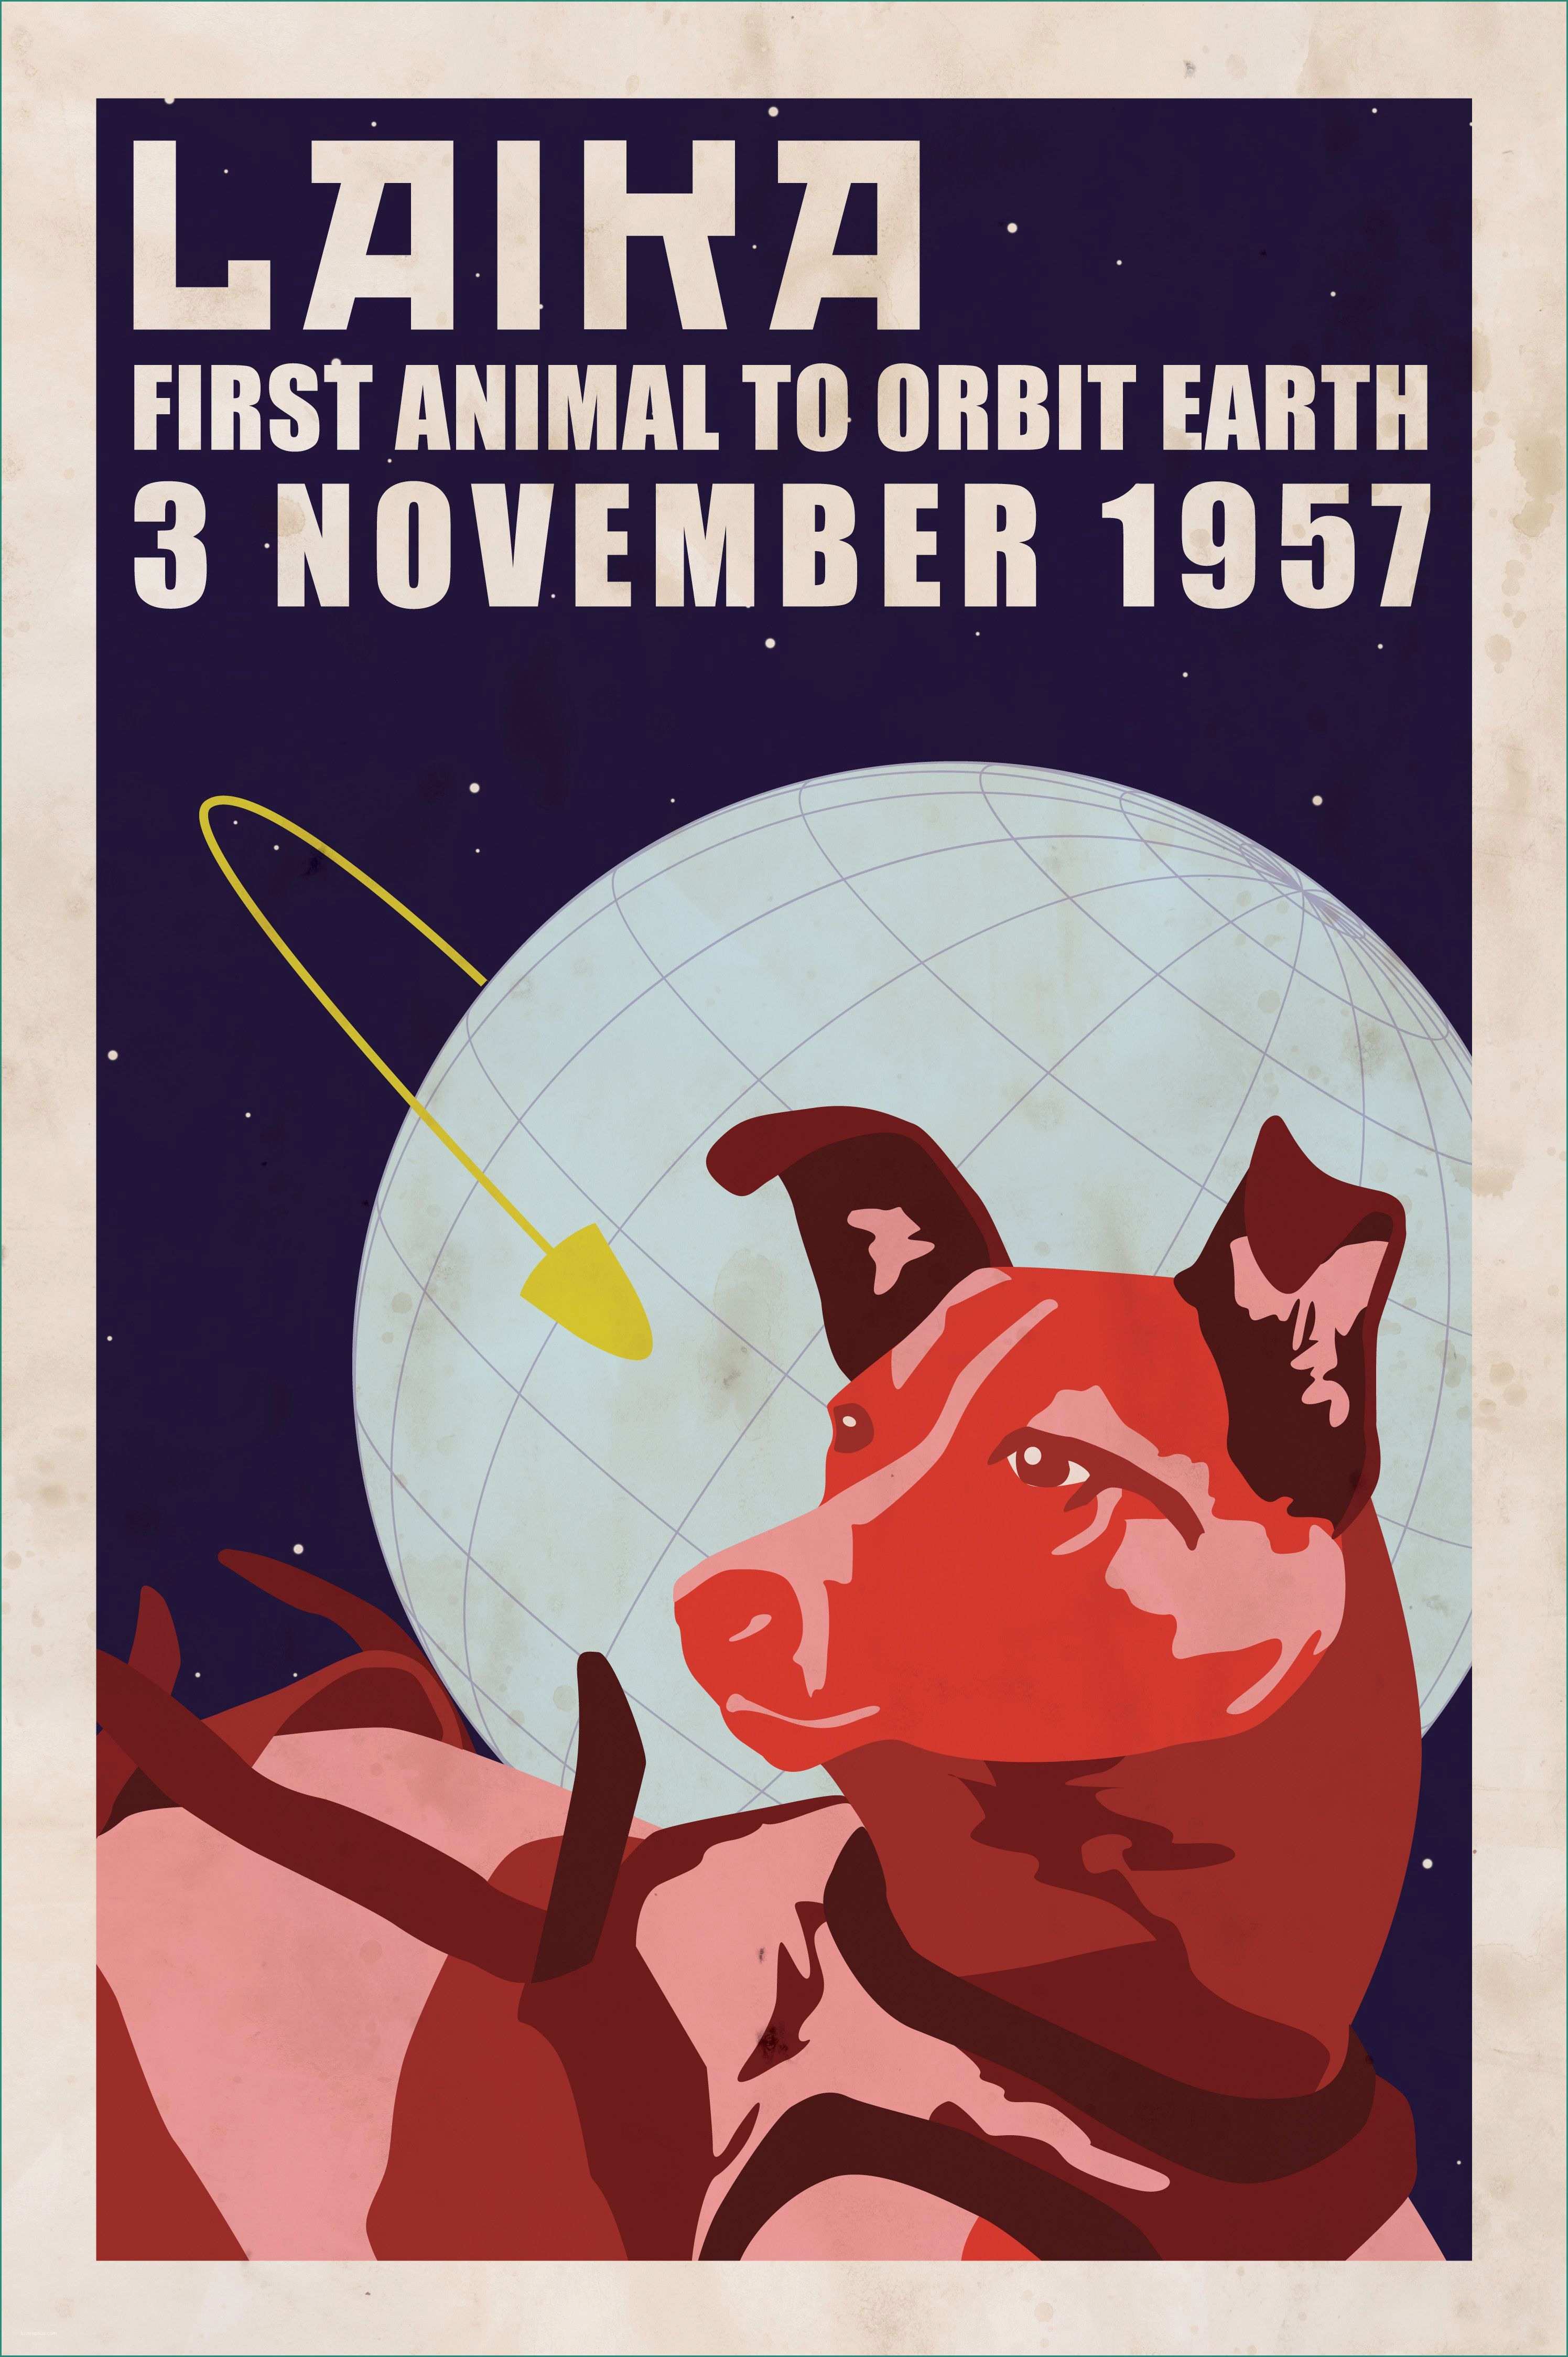 Watch Dogs Ita E Modern Propaganda Posters soviet Space Posters